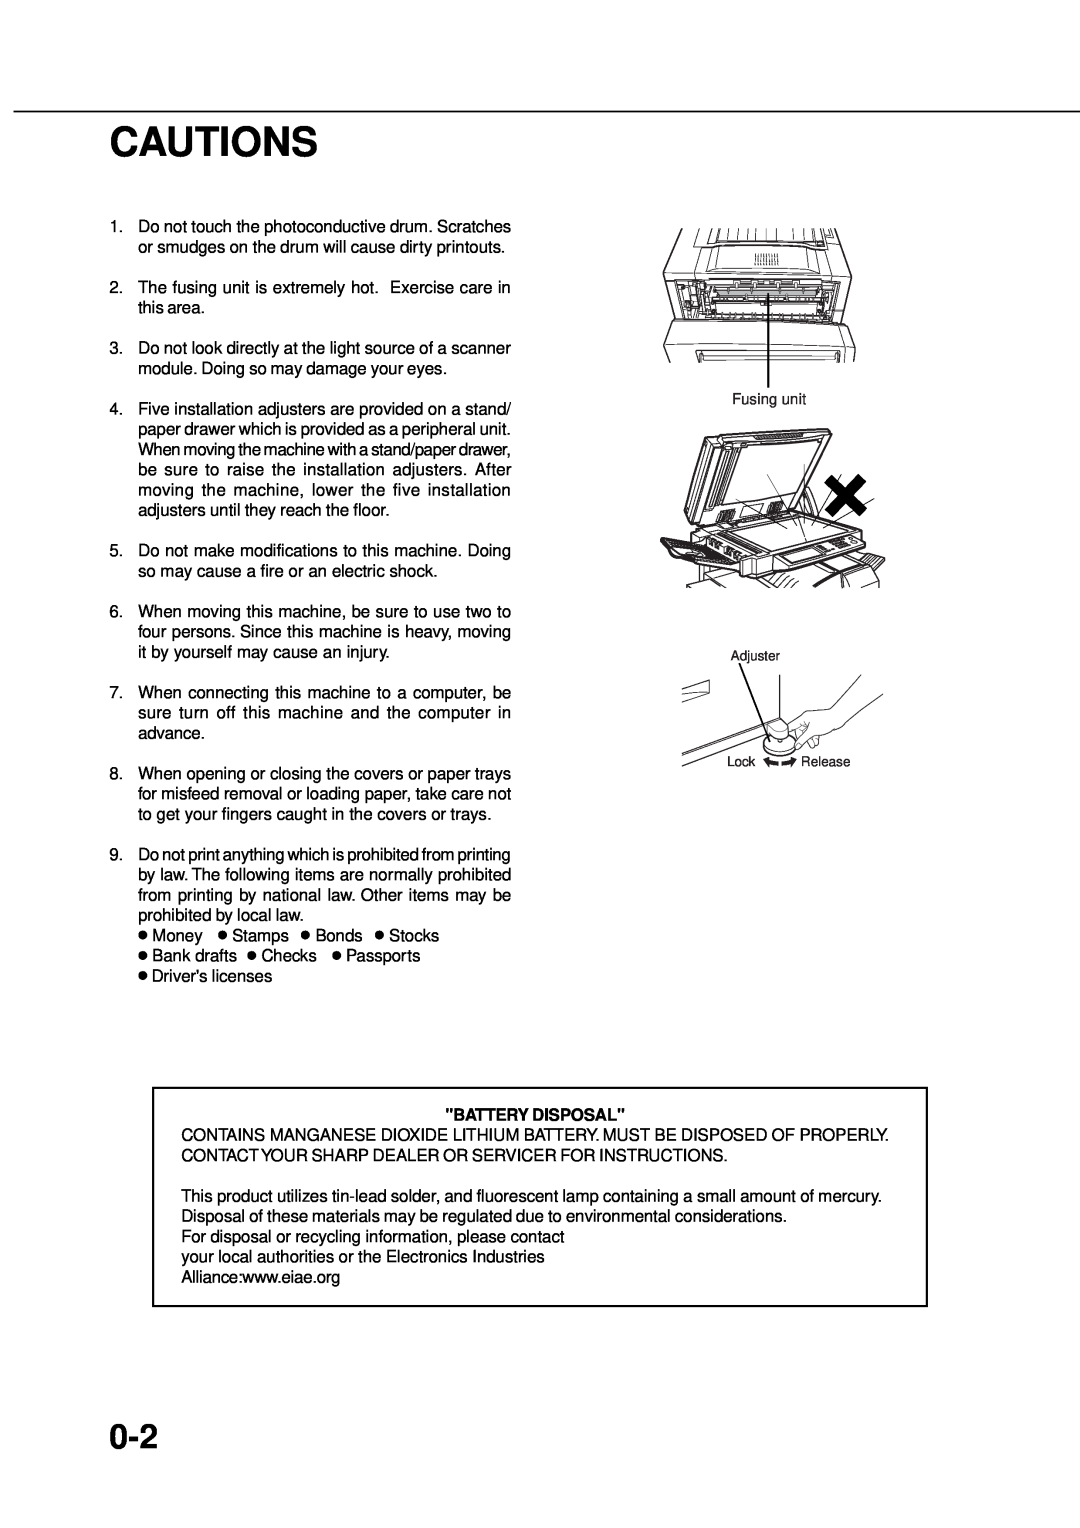 Sharp AR_M280, AR-350 operation manual Cautions, Battery Disposal 